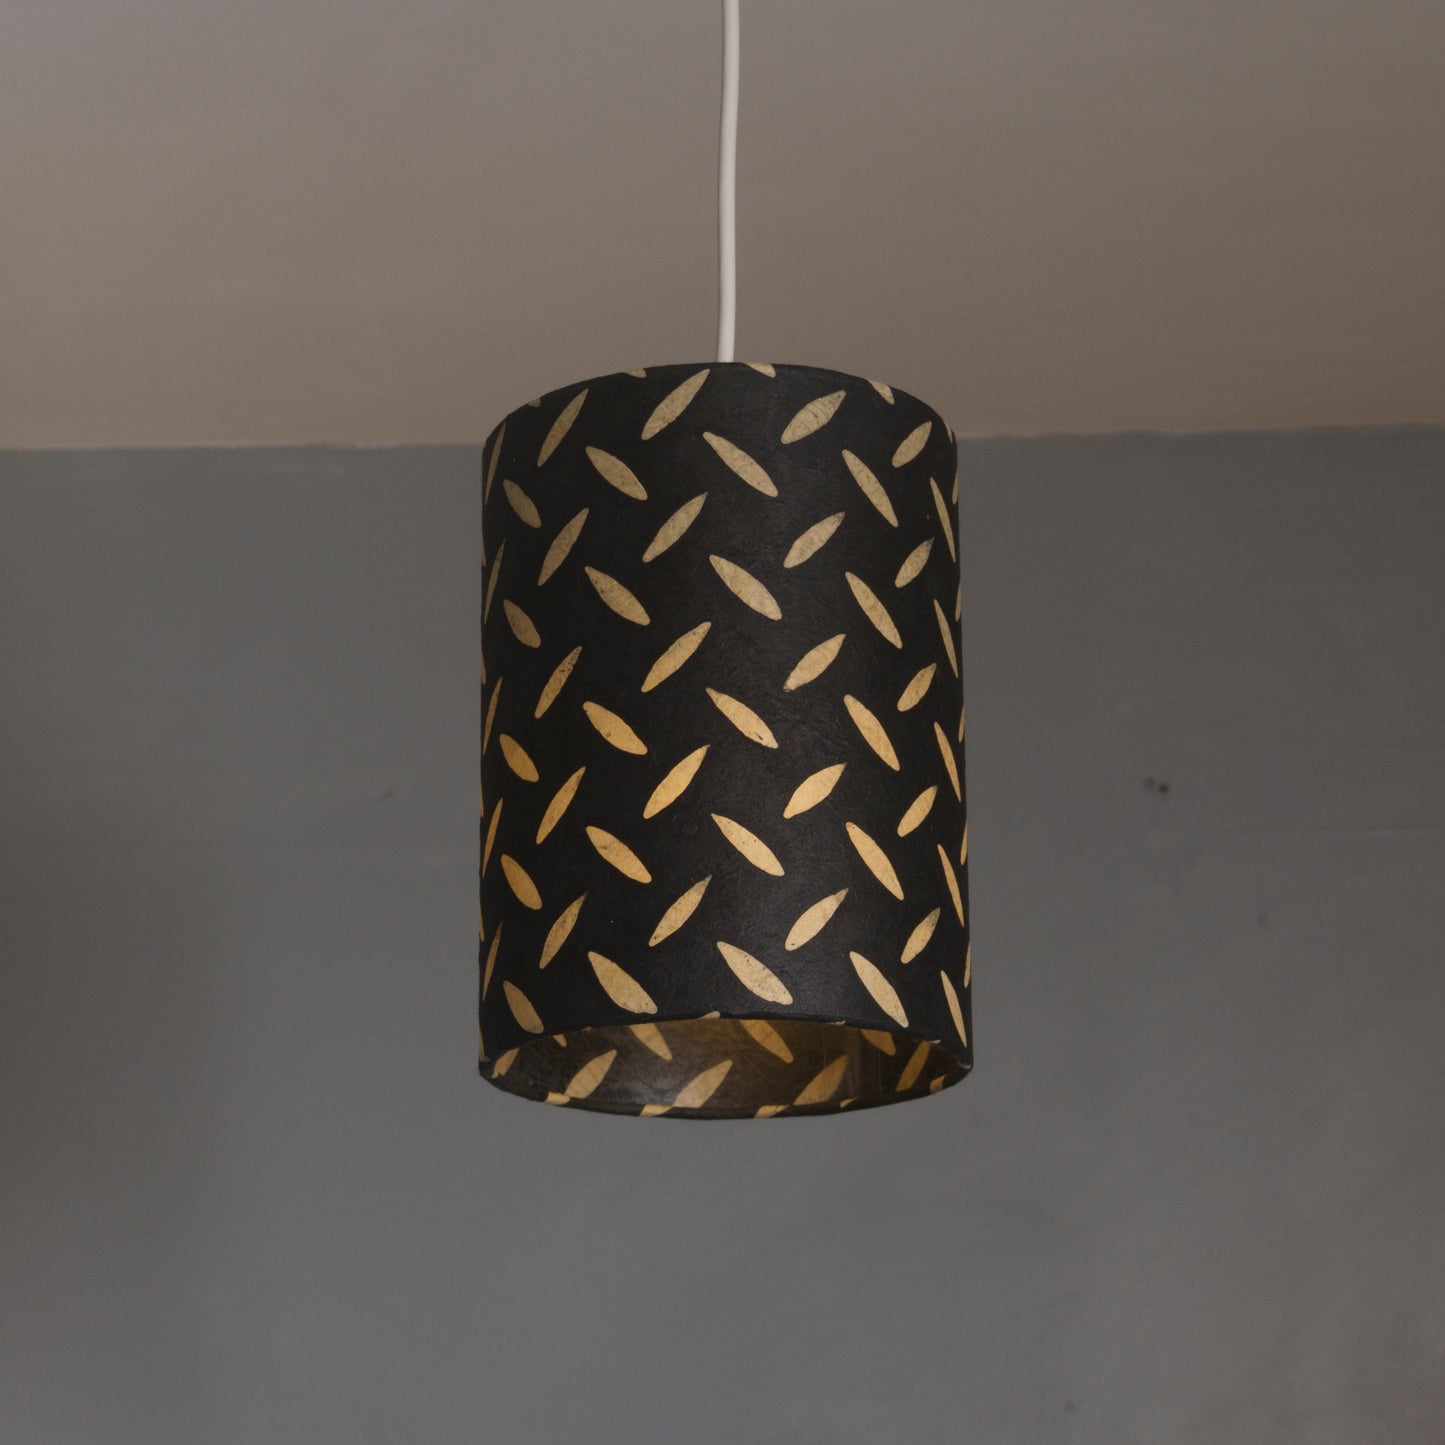 Square Lamp Shade - P11 - Batik Tread Plate Black, 20cm(w) x 20cm(h) x 20cm(d)